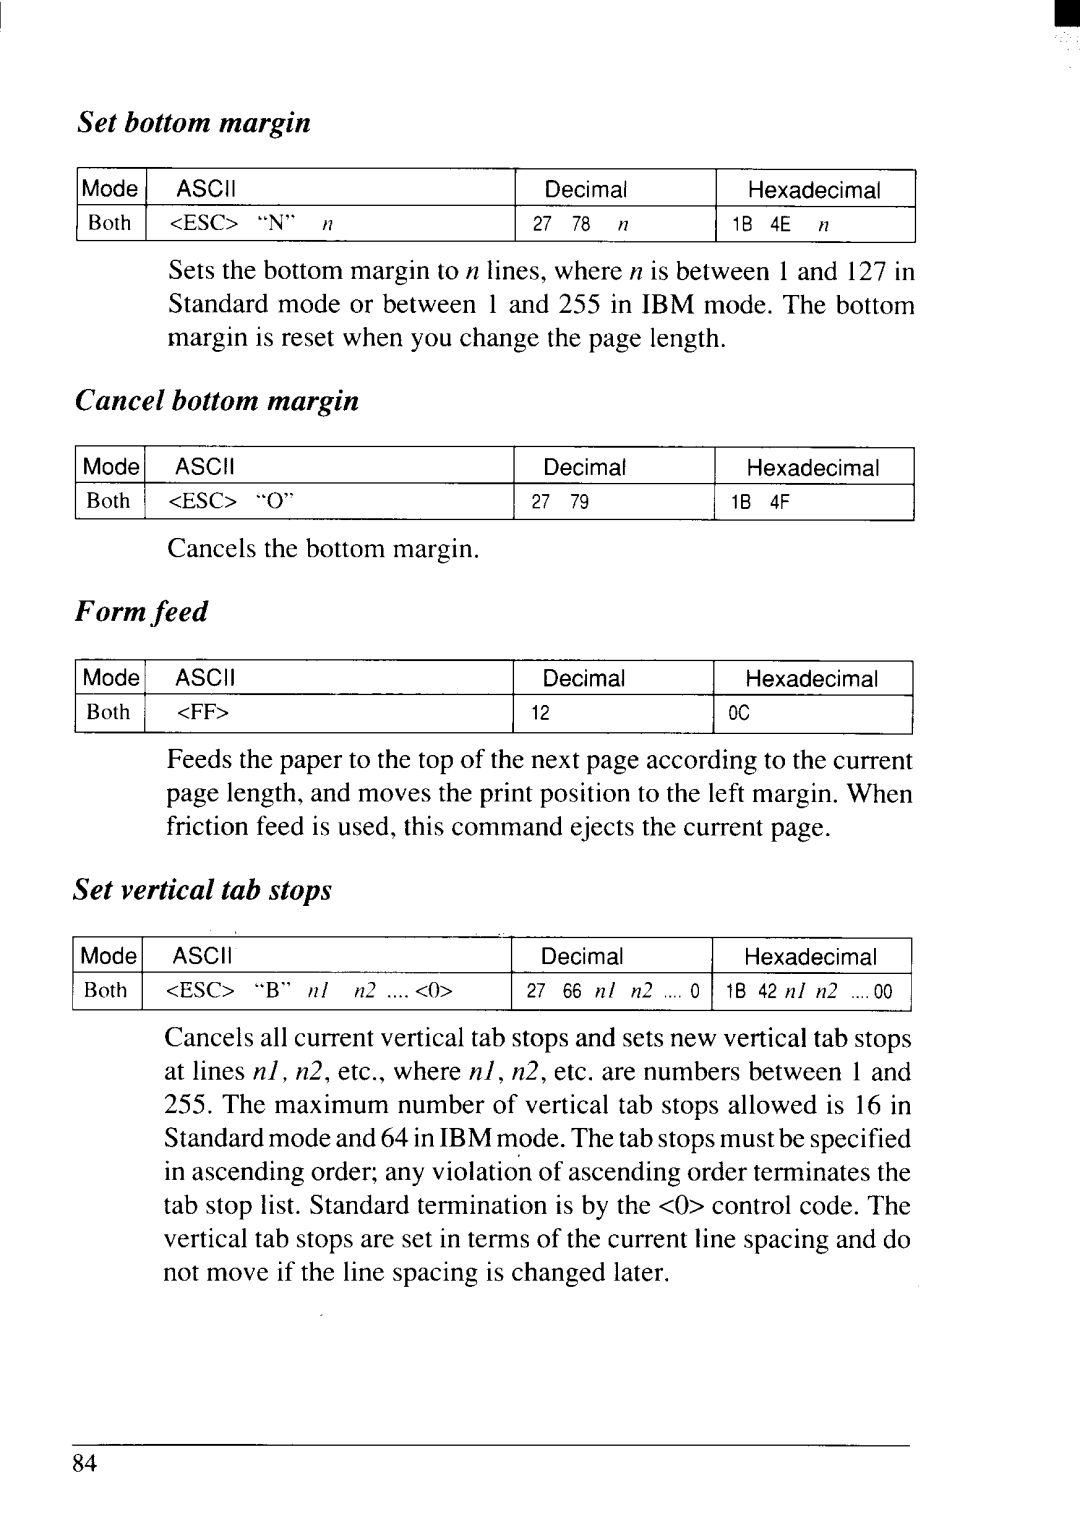 Star Micronics NX-2415II user manual Set bottom margin, Cancel bottom margin, Form feed, Set vertical tab stops 